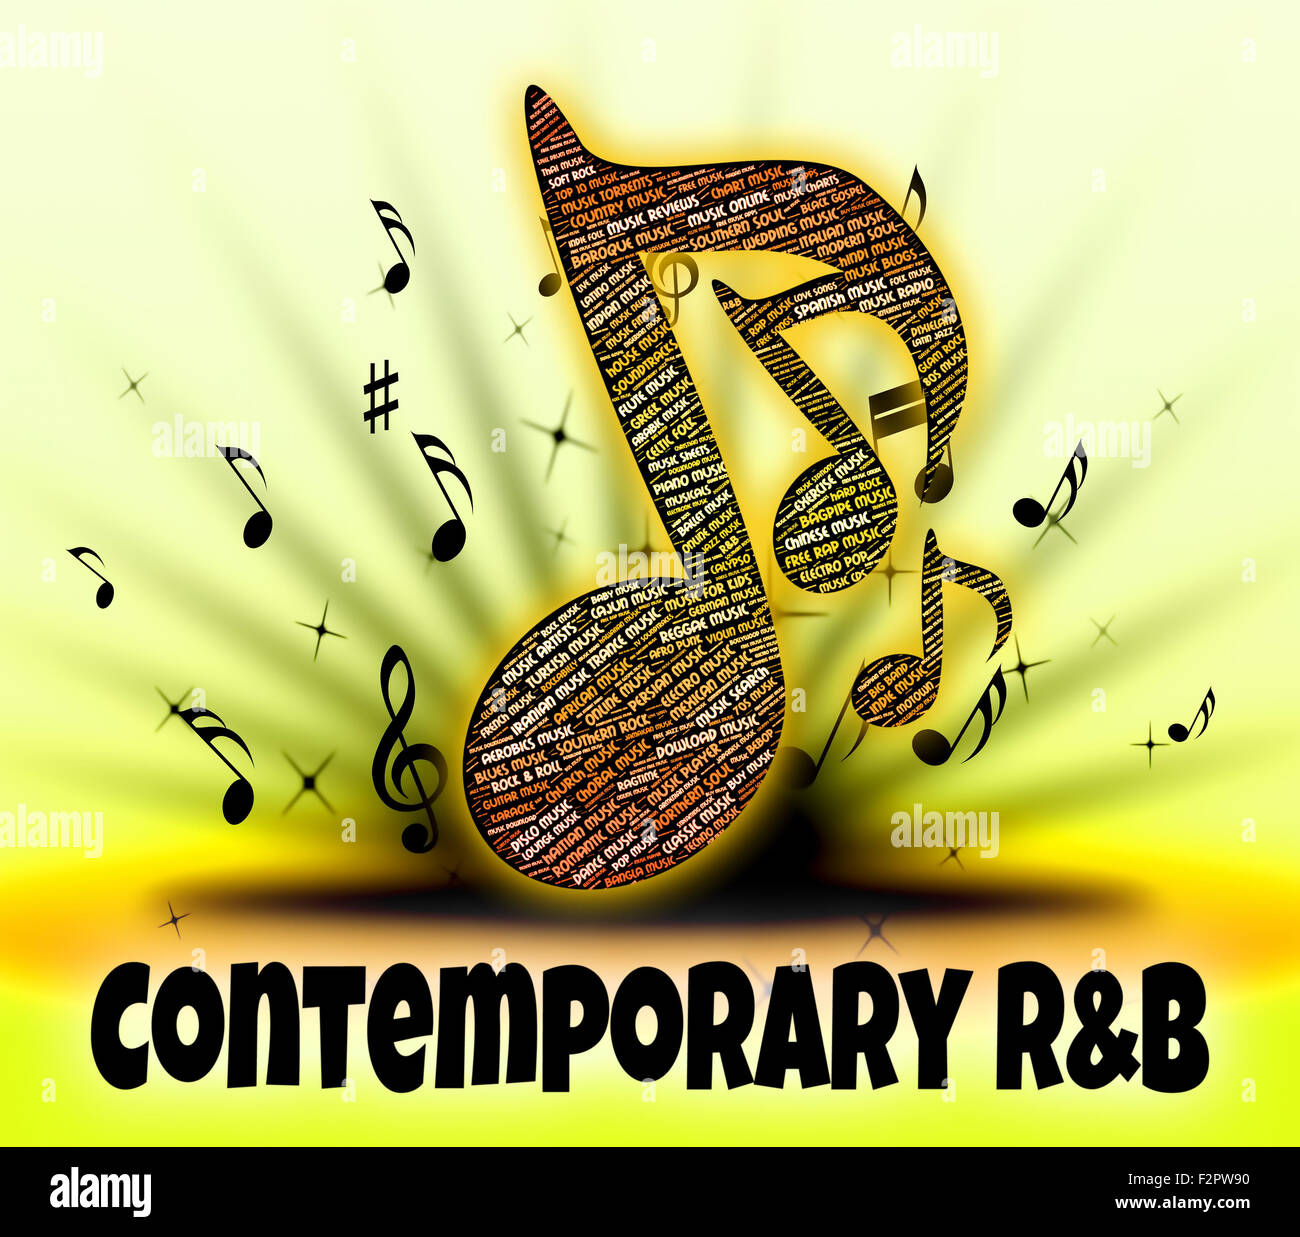 Contemporary R&B, Contemporary R&B Music